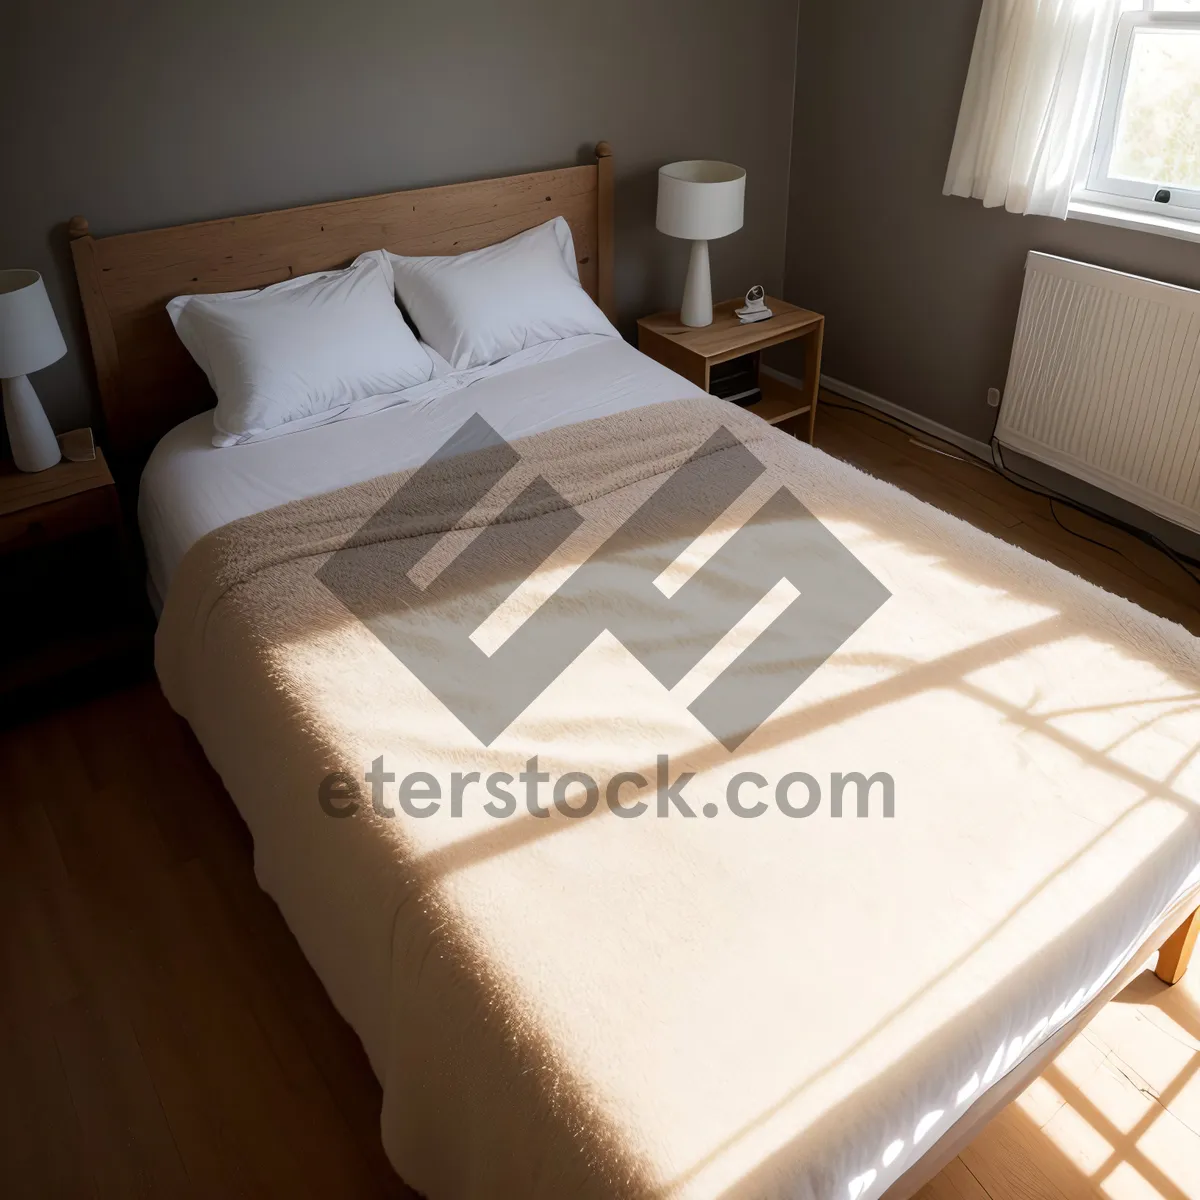 Picture of Modern Luxury Bedroom with Cozy Comfort